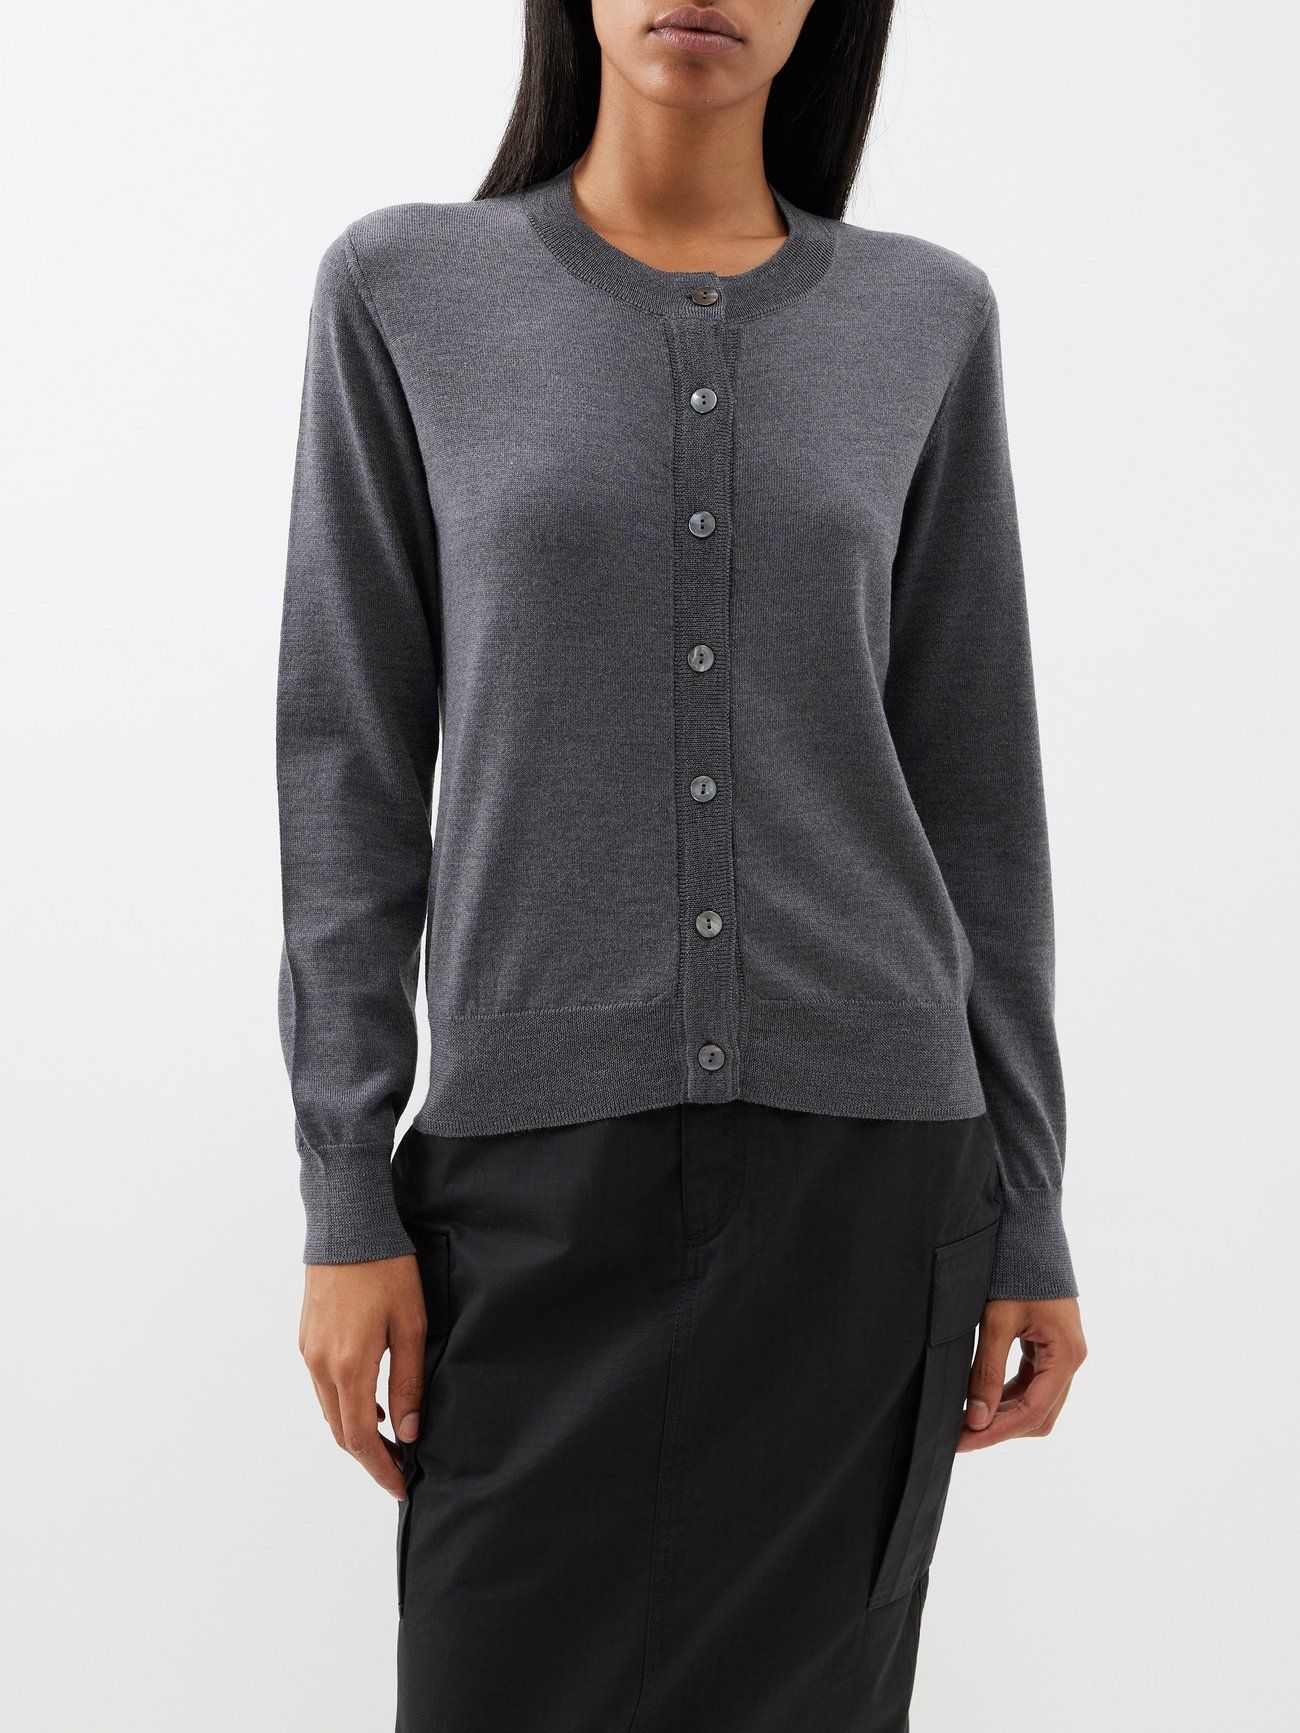 15 Comfy, Cozy Merino Wool Sweaters Worth Shopping